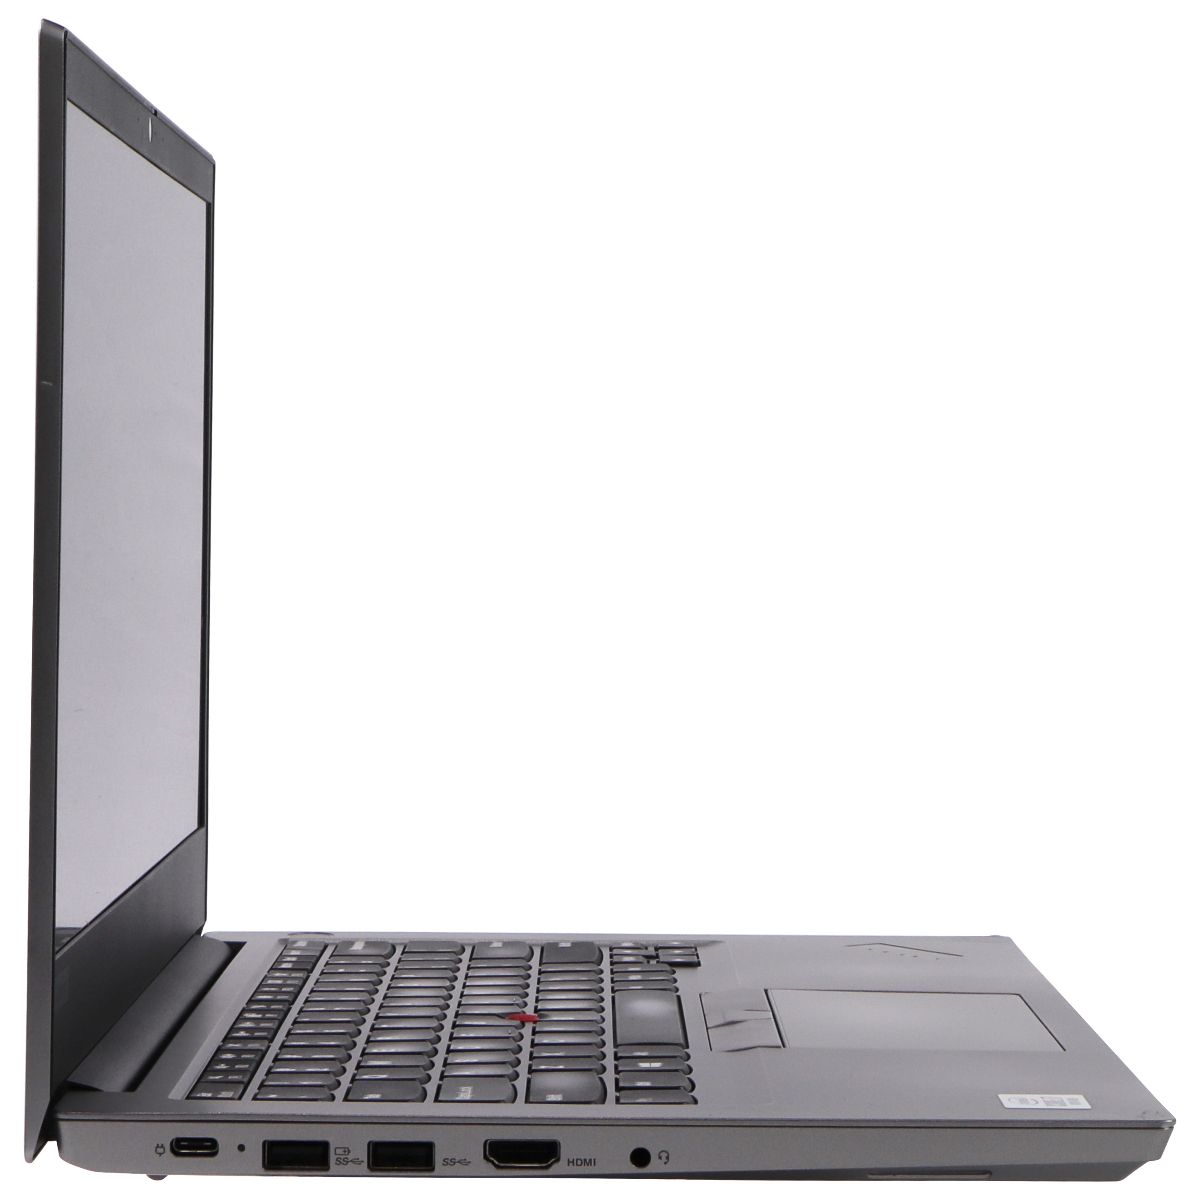 Lenovo ThinkPad E14 (14-in) FHD Laptop (20RA) i7-10510U/256GB SSD/8GB/10 Home Laptops - PC Laptops & Netbooks Lenovo    - Simple Cell Bulk Wholesale Pricing - USA Seller